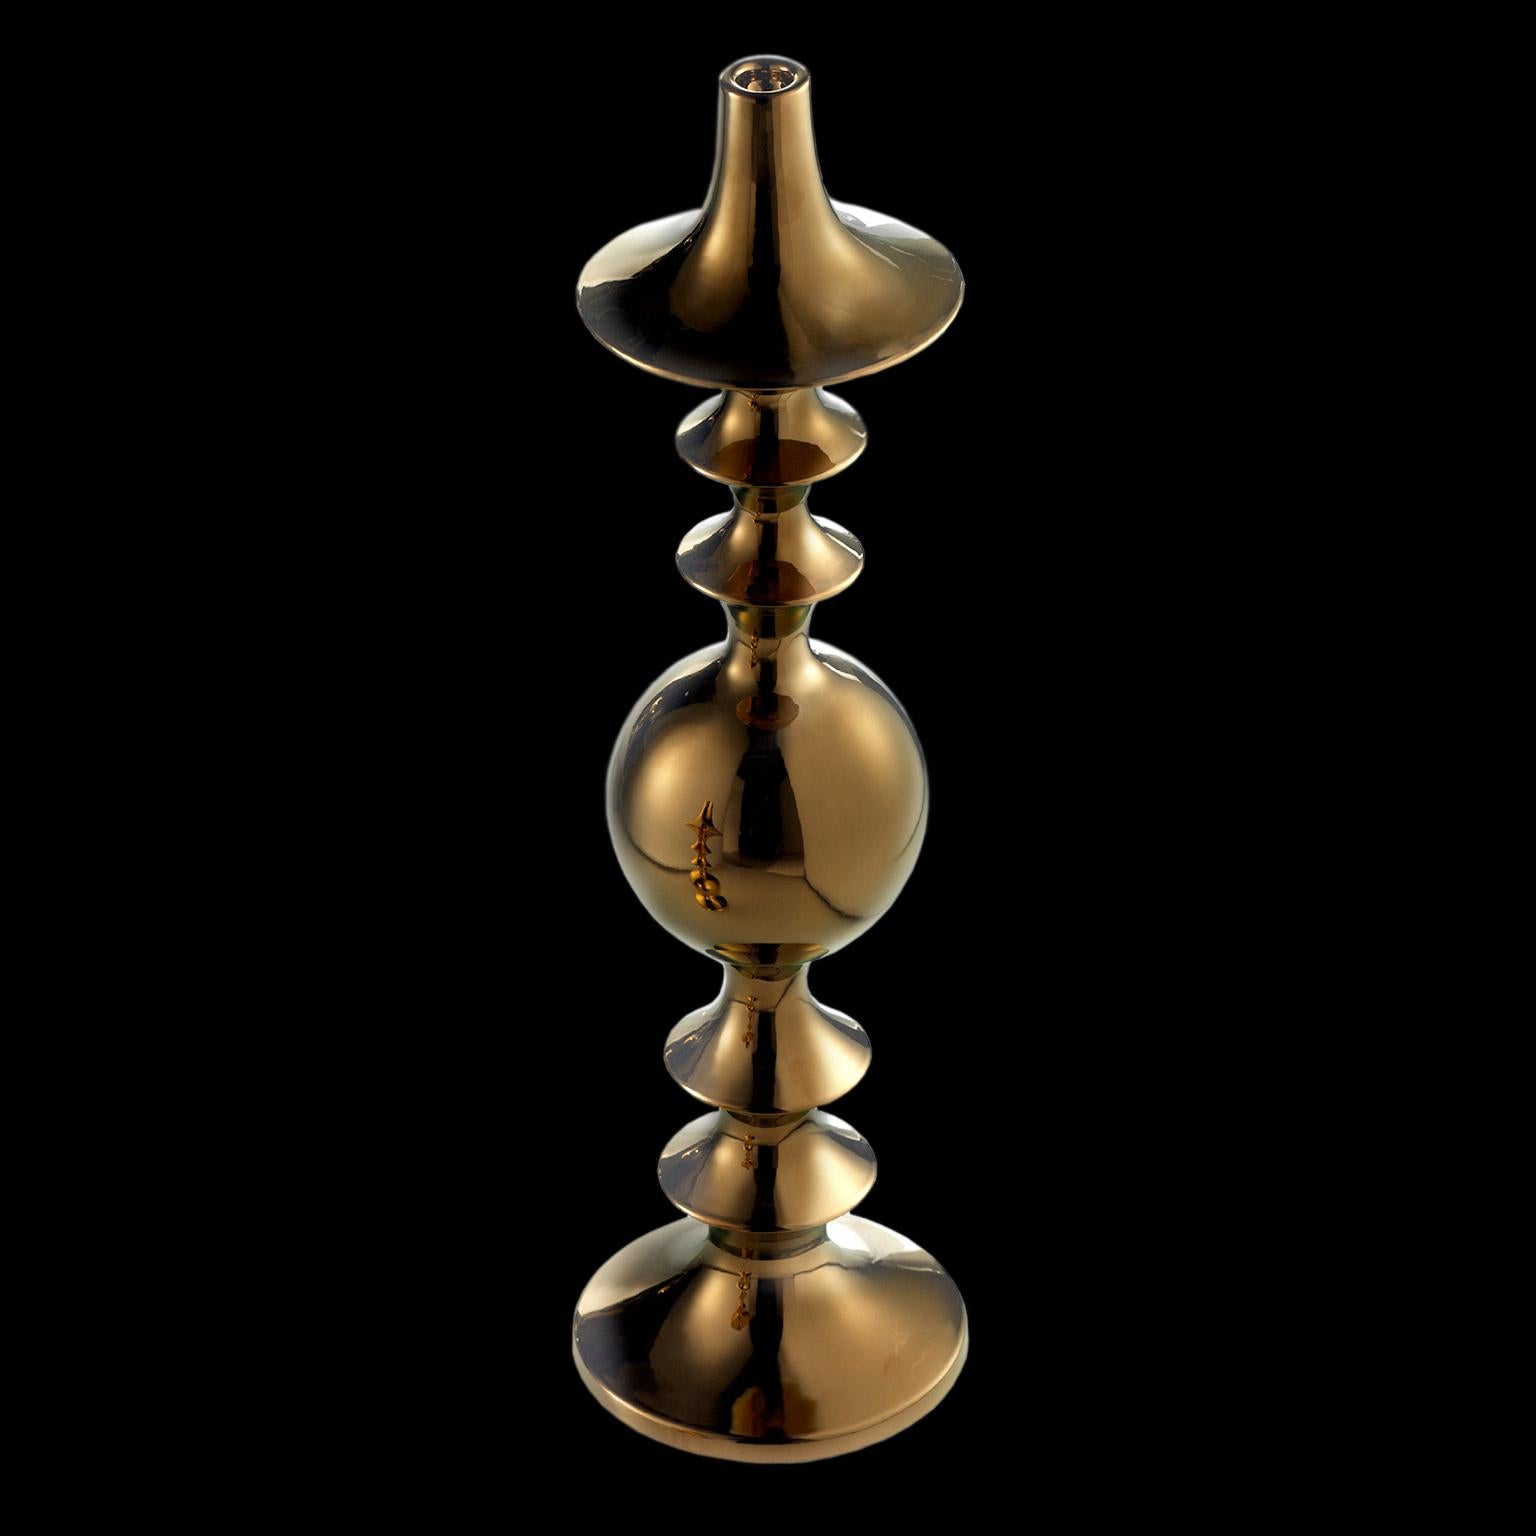 Vase aus Keramik, handgefertigt in Bronze
BRIX II - Code CA060 - H. 76,0 cm. - Dm. 20.0 cm.